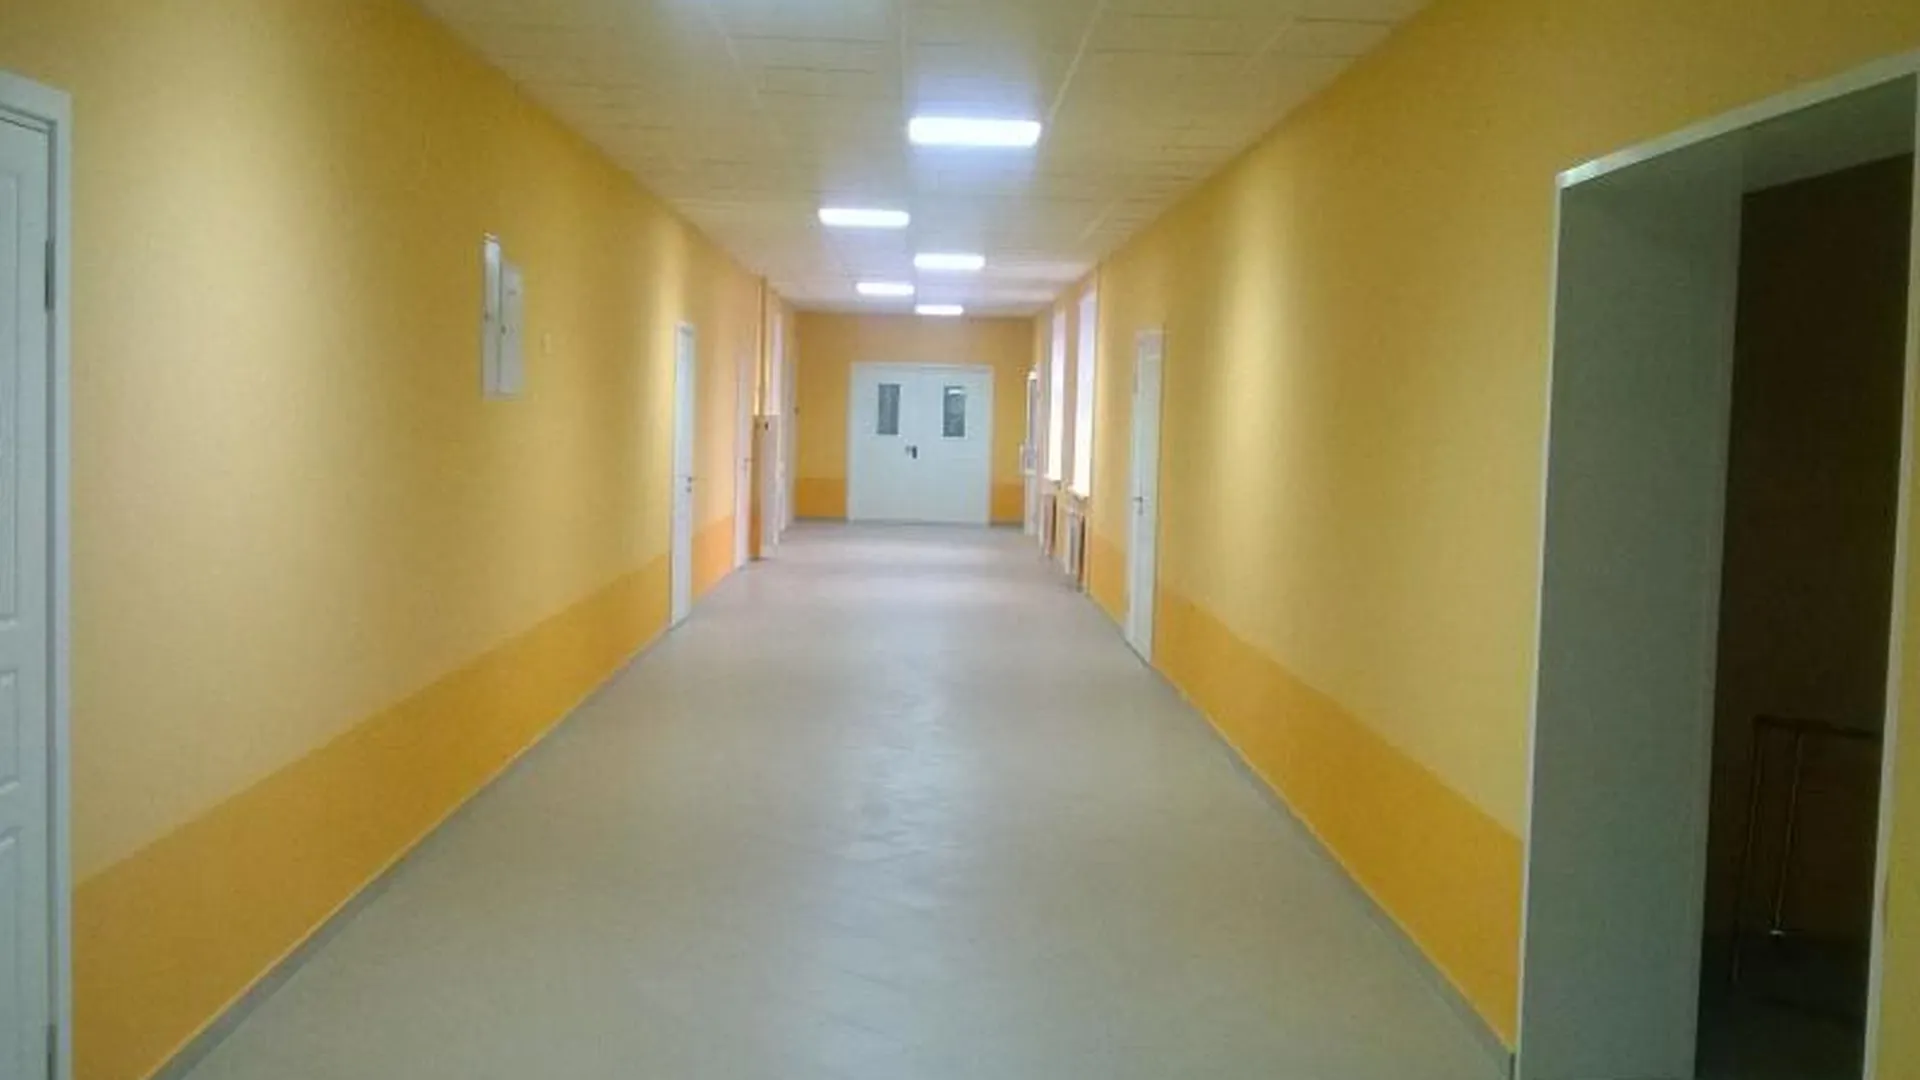 Детский сад на 210 мест построили в Луховицком районе 